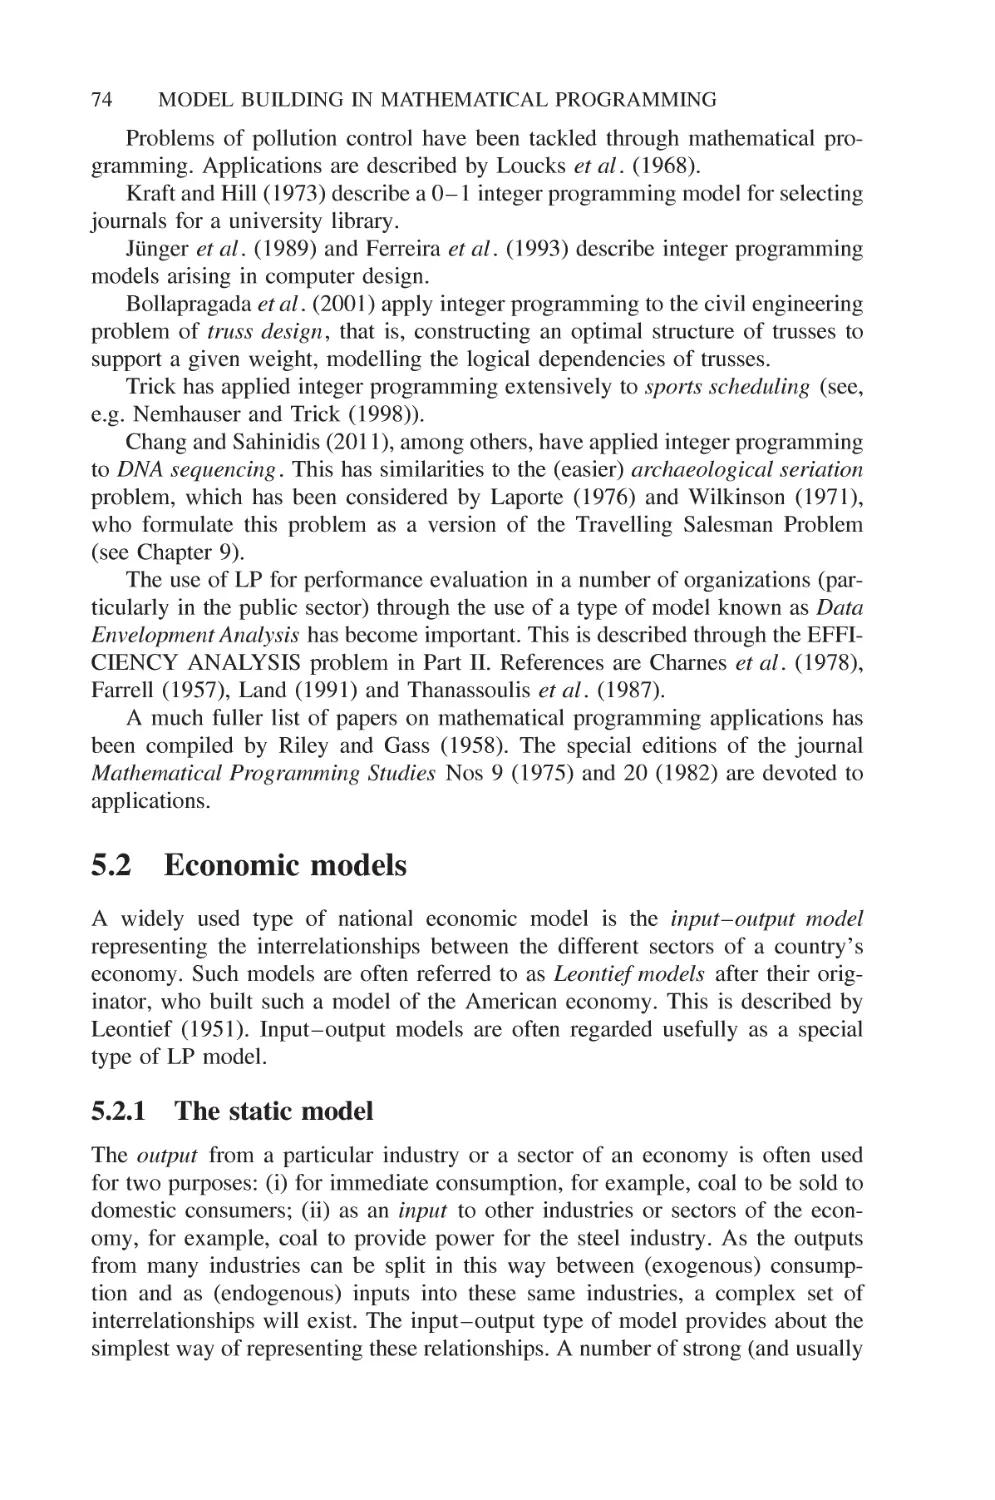 5.2 Economic models